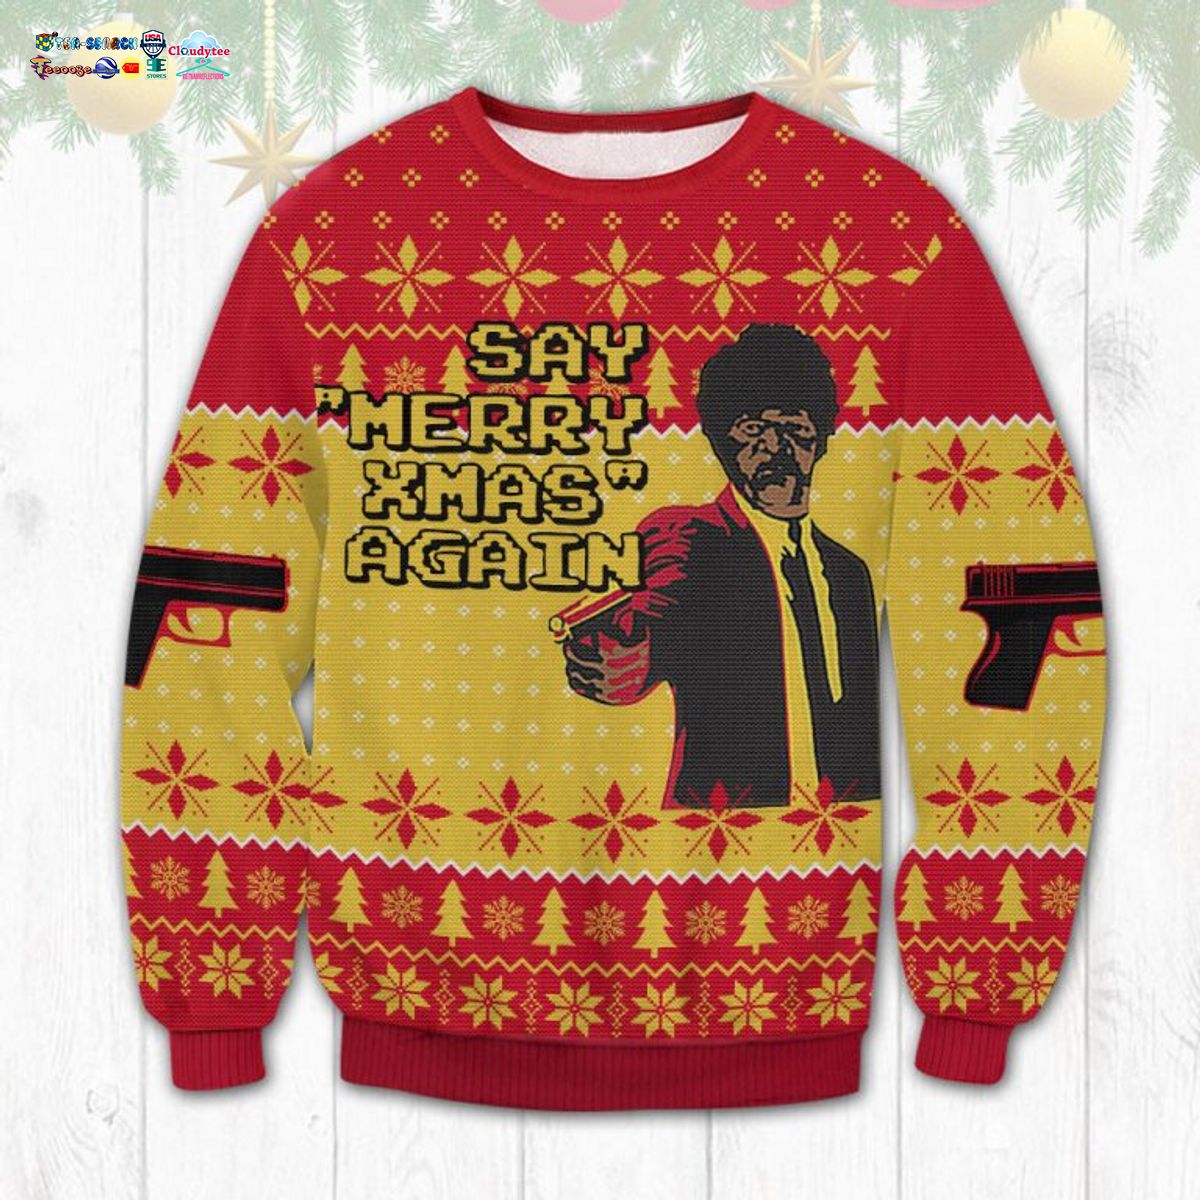 Pulp Fiction Say Merry Xmas Again Ugly Christmas Sweater - Loving, dare I say?